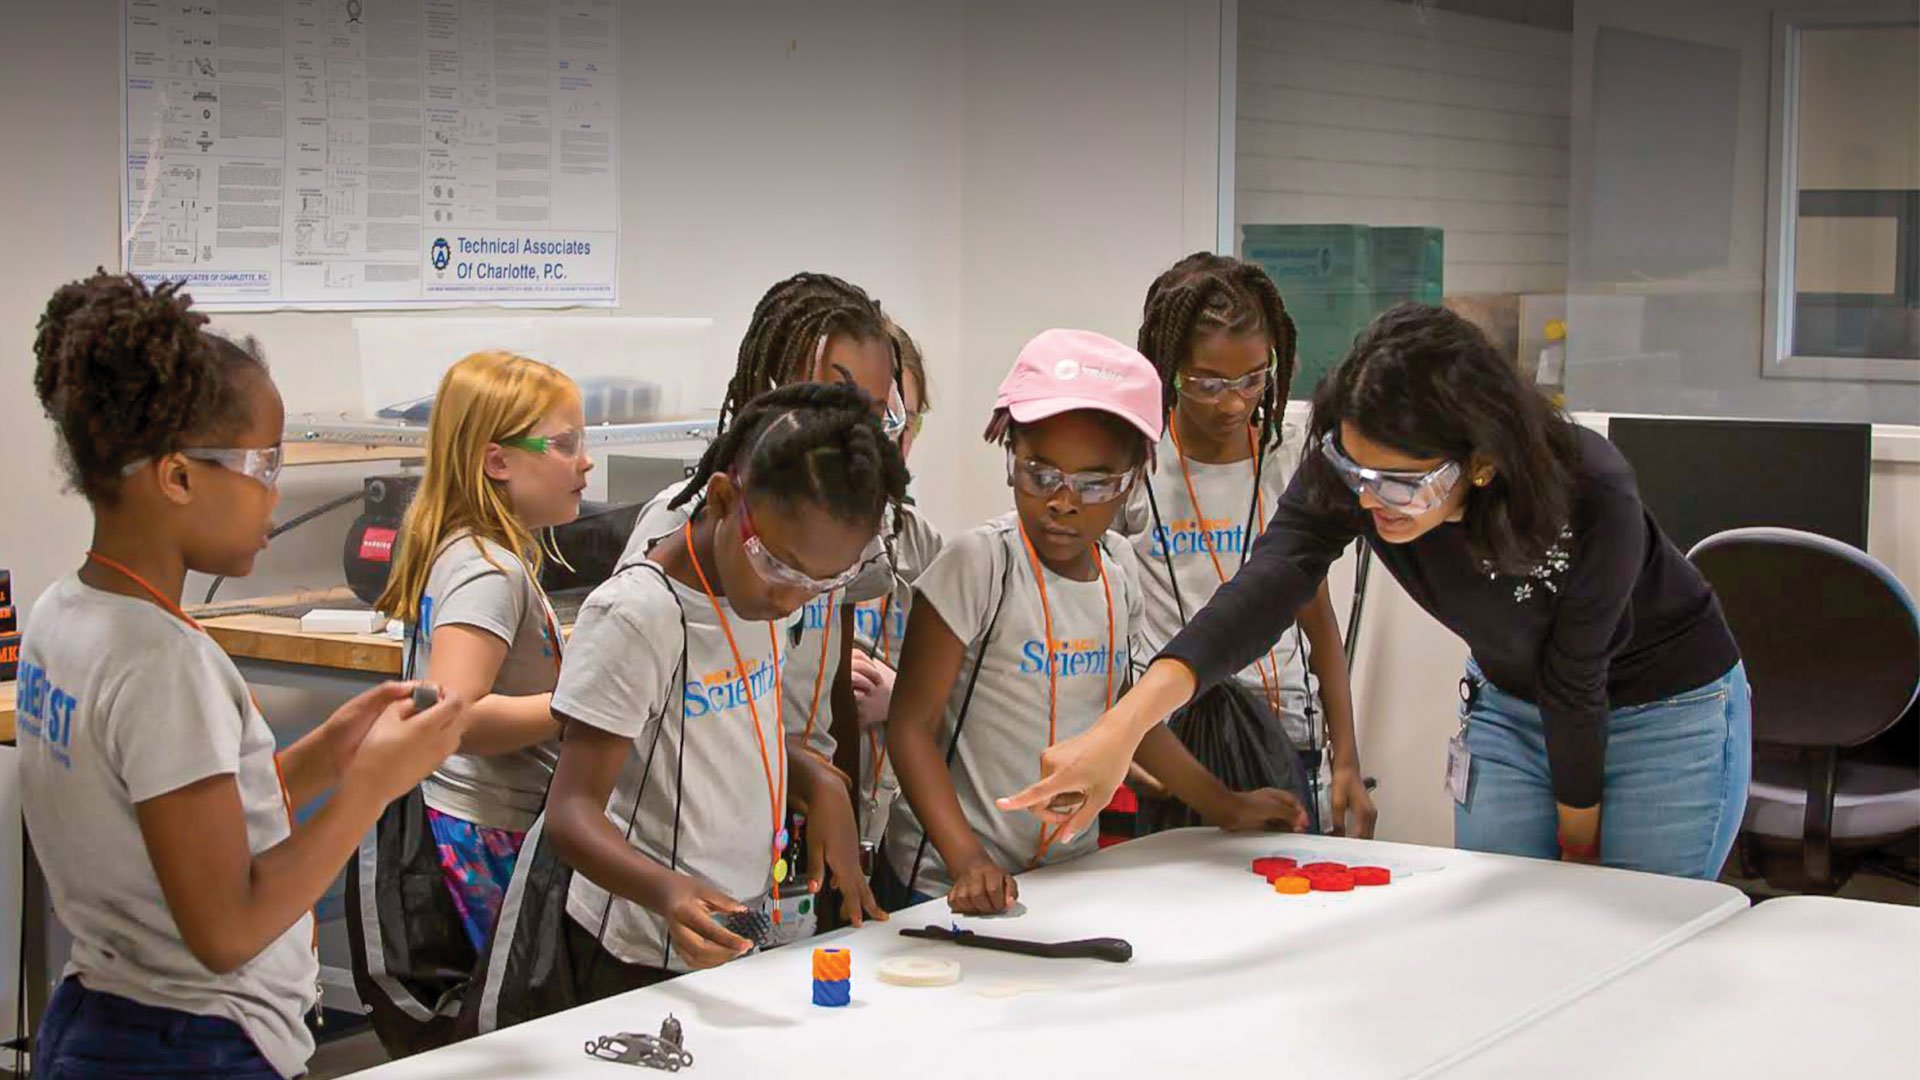 Rashmi Vadlakonda explains 3D-printing technology to Project Scientist girls who visited Trane Technologies corporate headquarters in North Carolina.